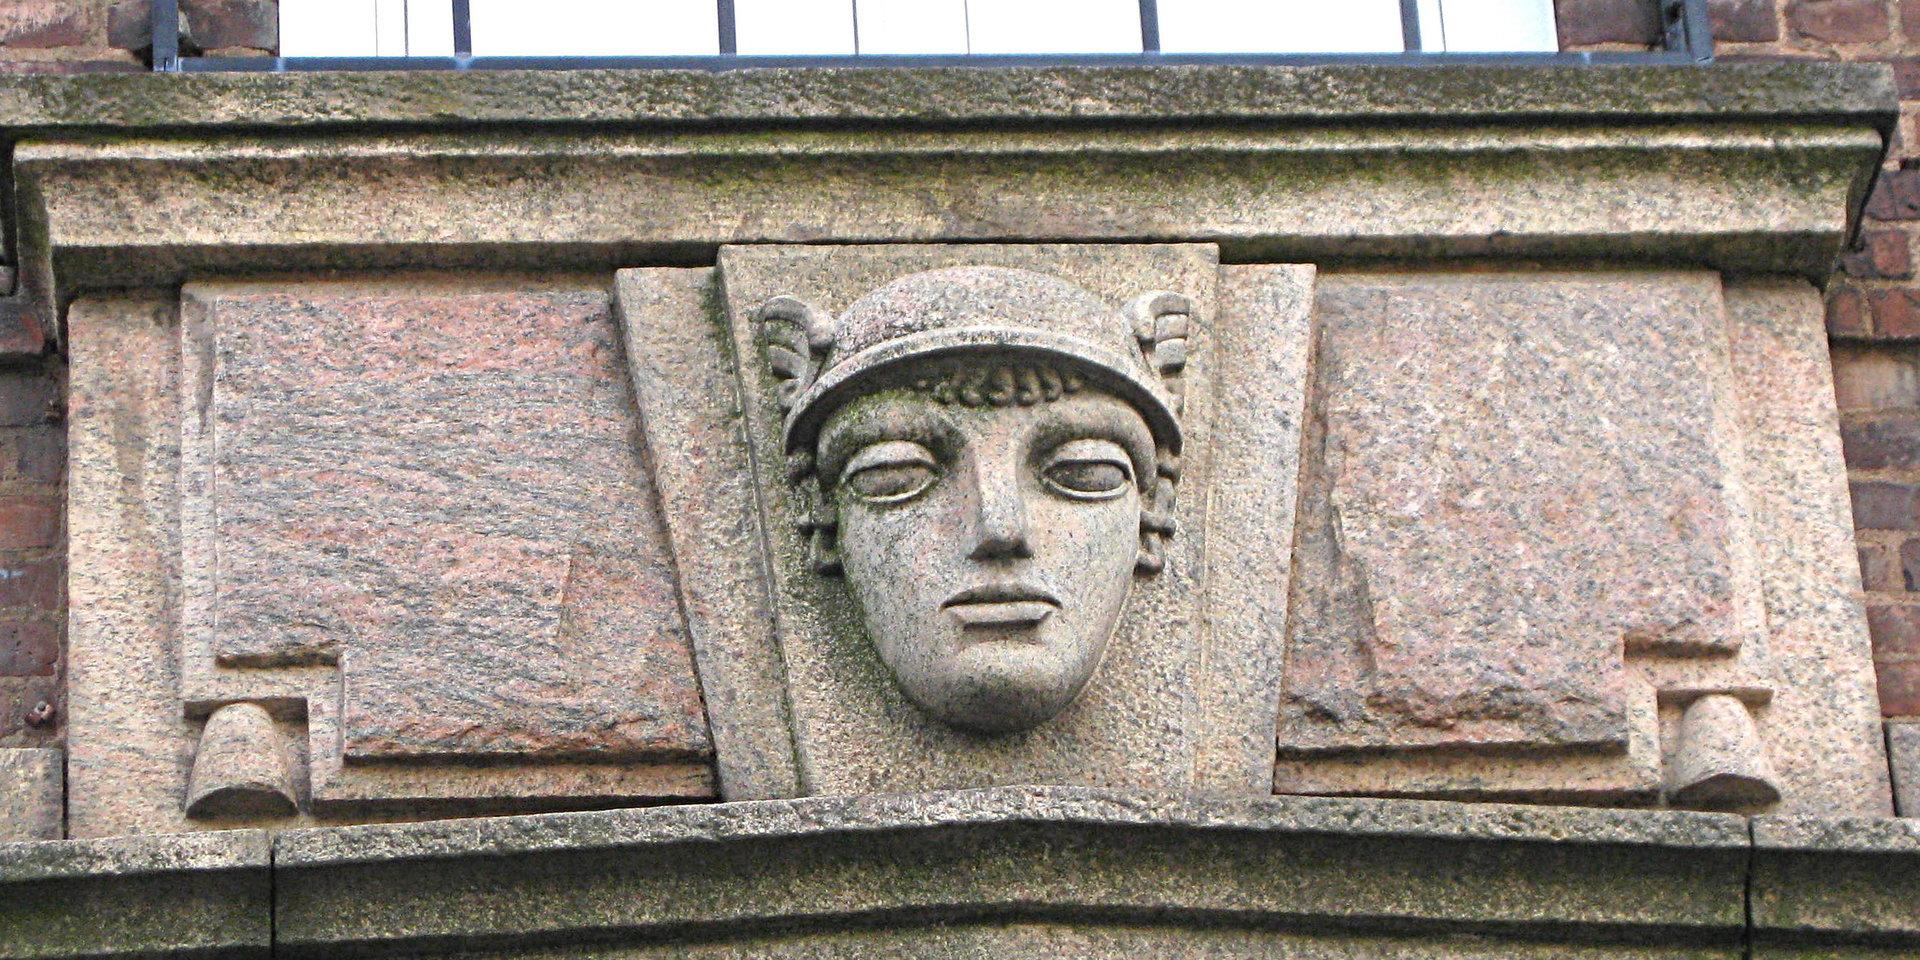 Hermeshuvudet med sin bevingade hjälm kröner bankens imponerande entré.